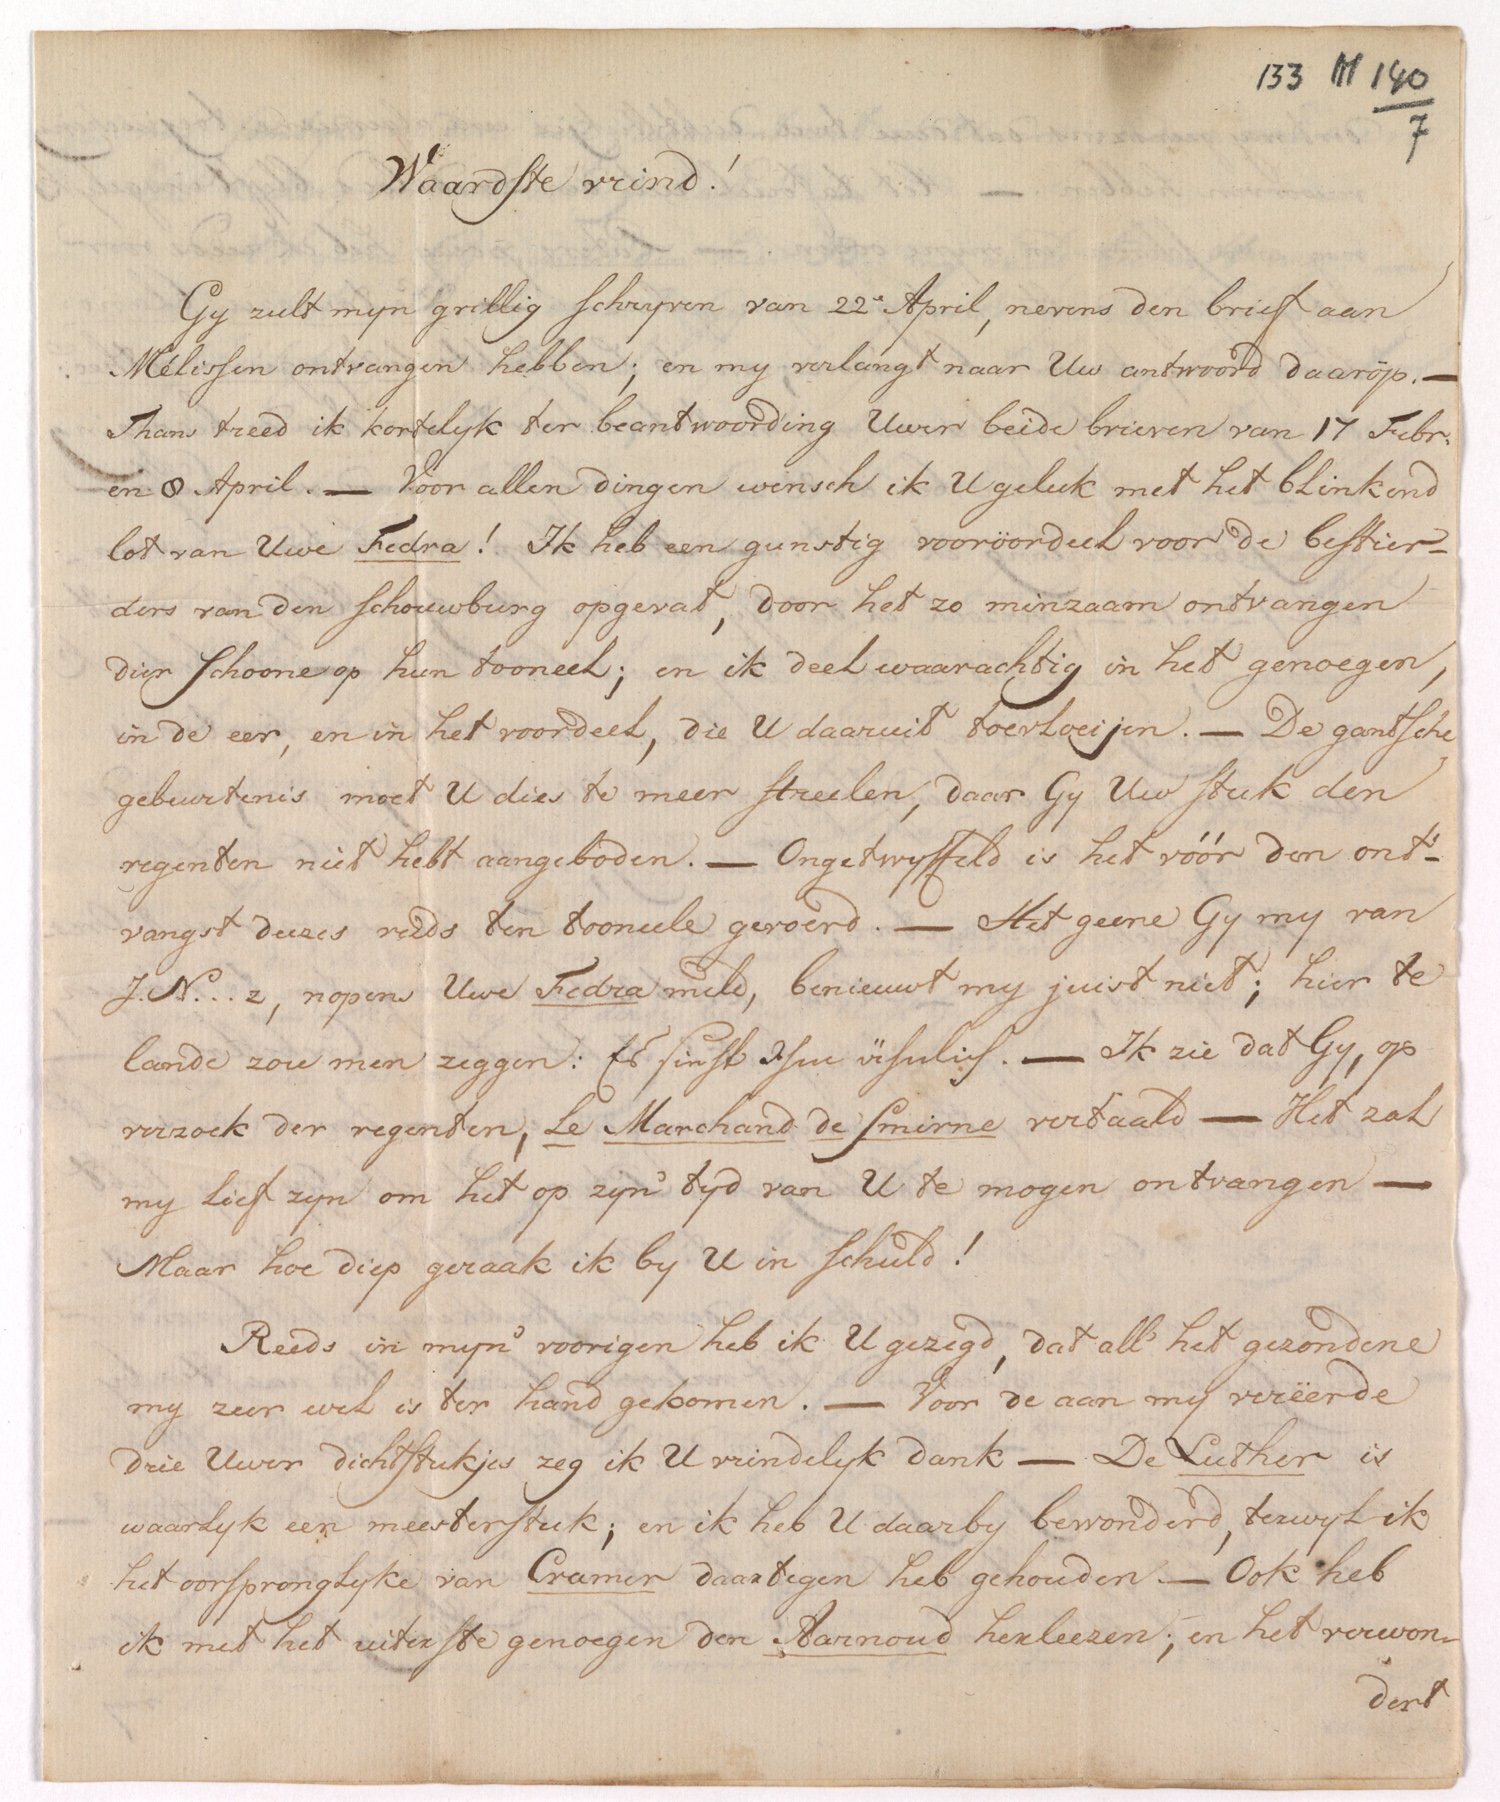 Brief van O.C.F. Hoffham aan P.J. Uylenbroek, 2 mei 1775, eerste blad